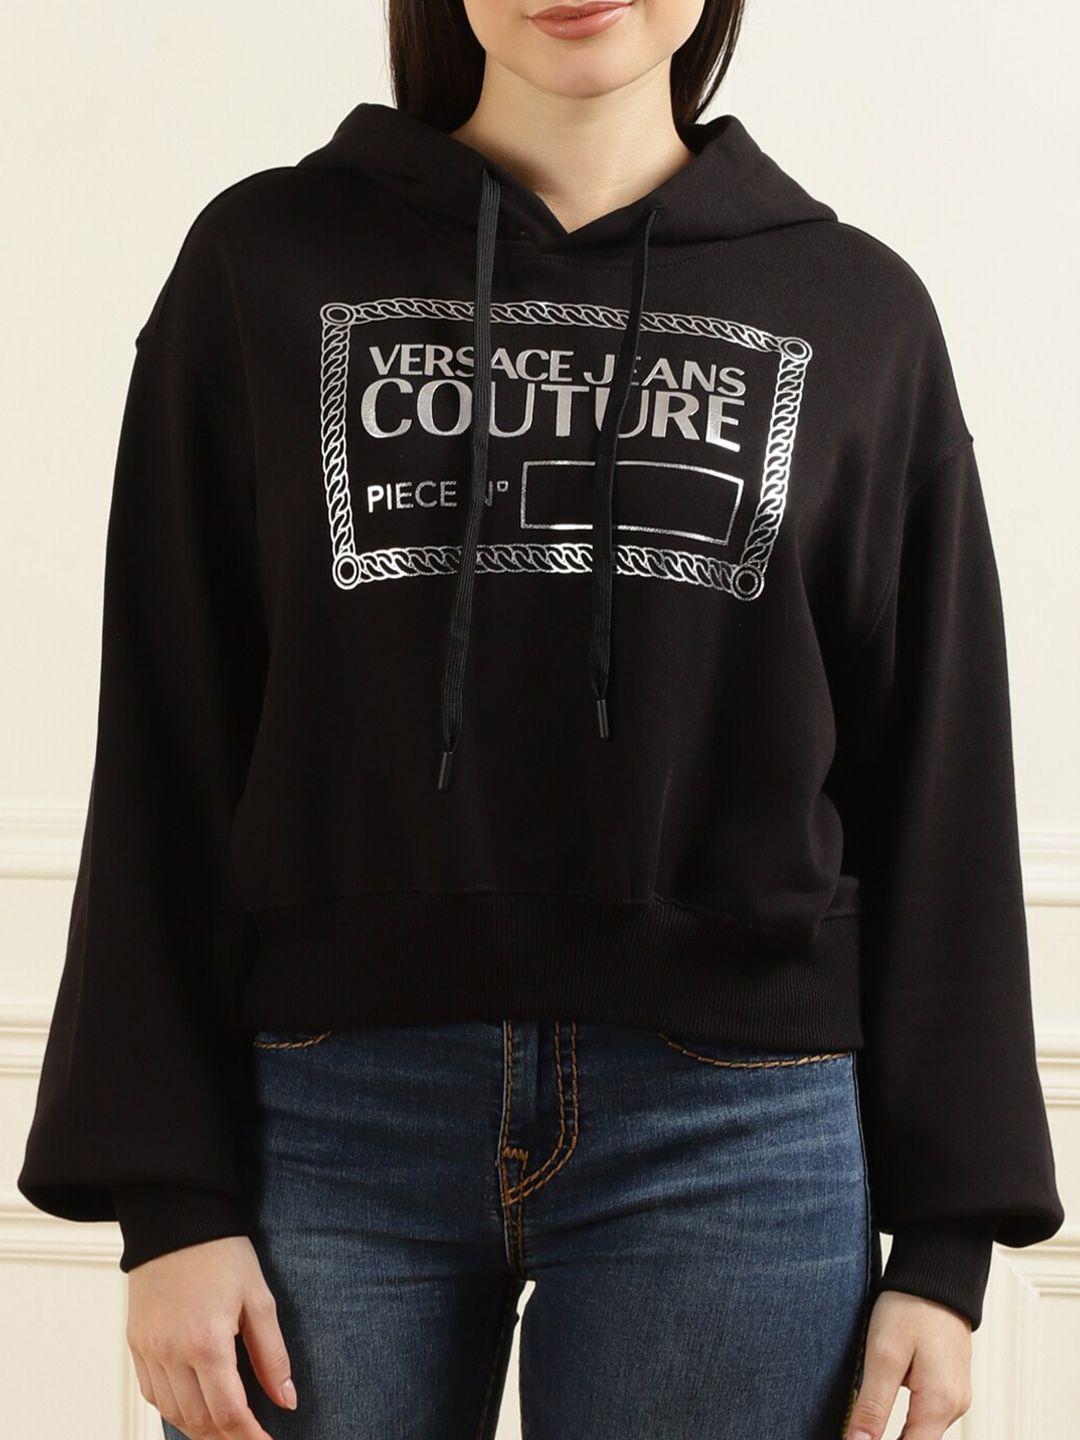 versace jeans couture women black vjc printed hooded pure cotton sweatshirt